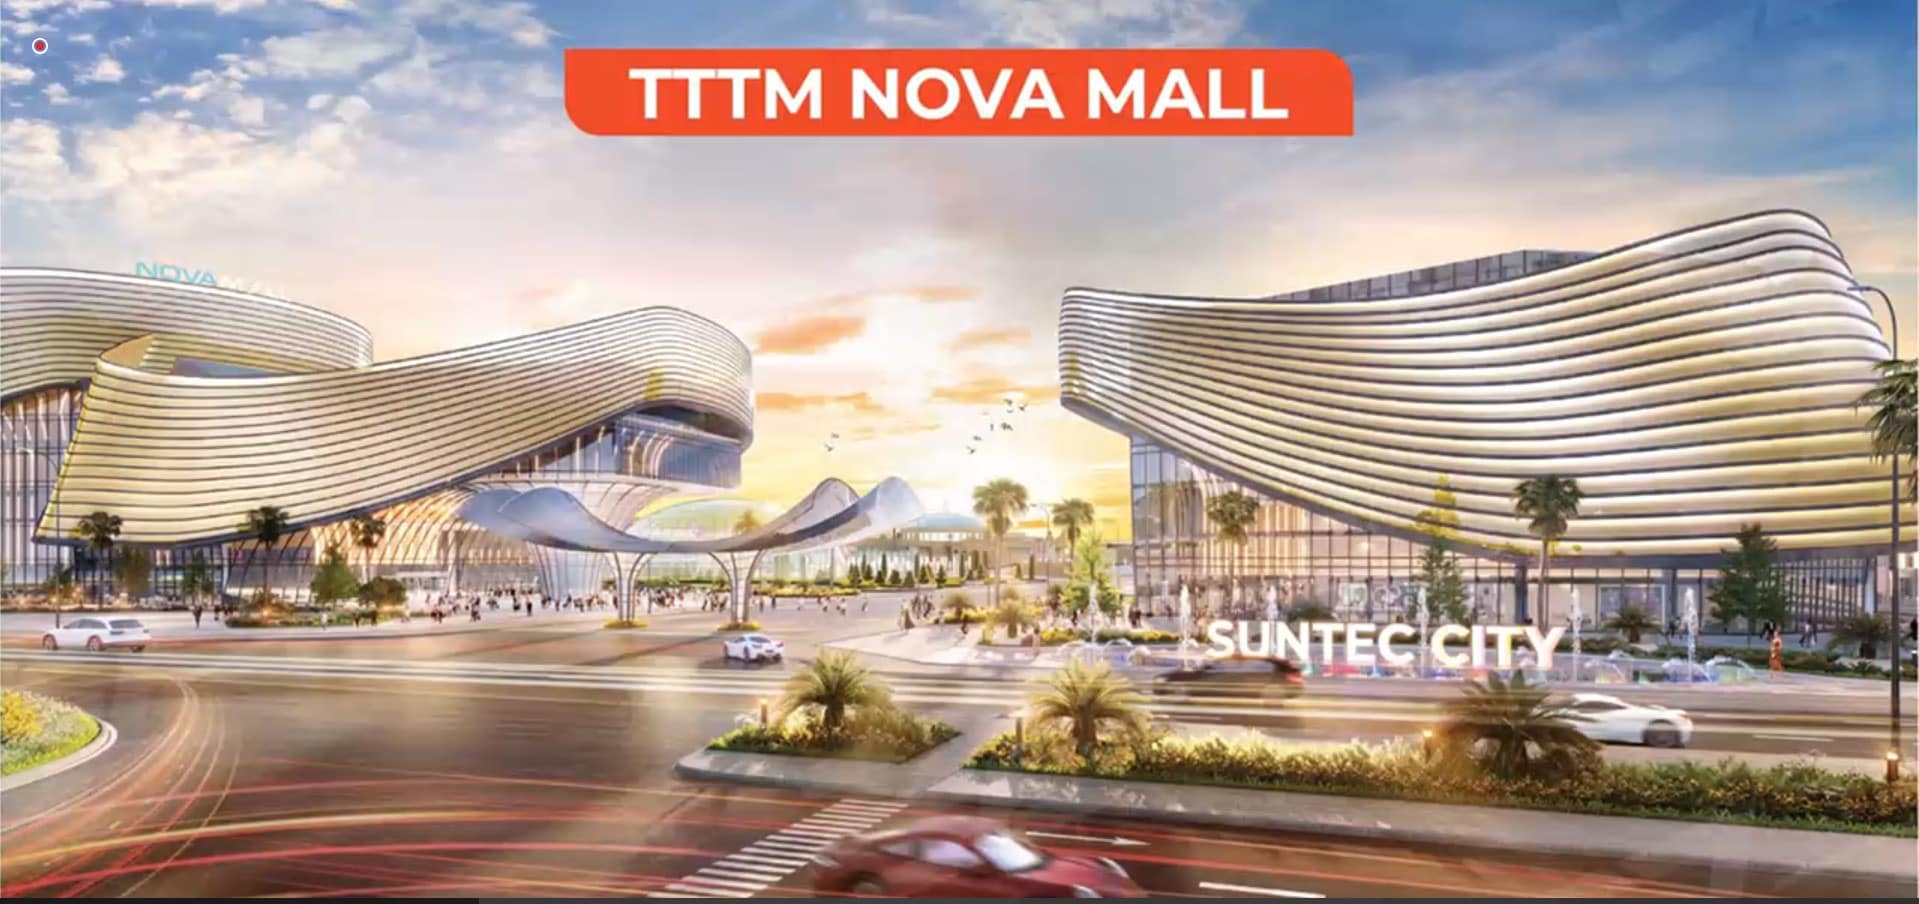 tttm Nova Mall Suntec City